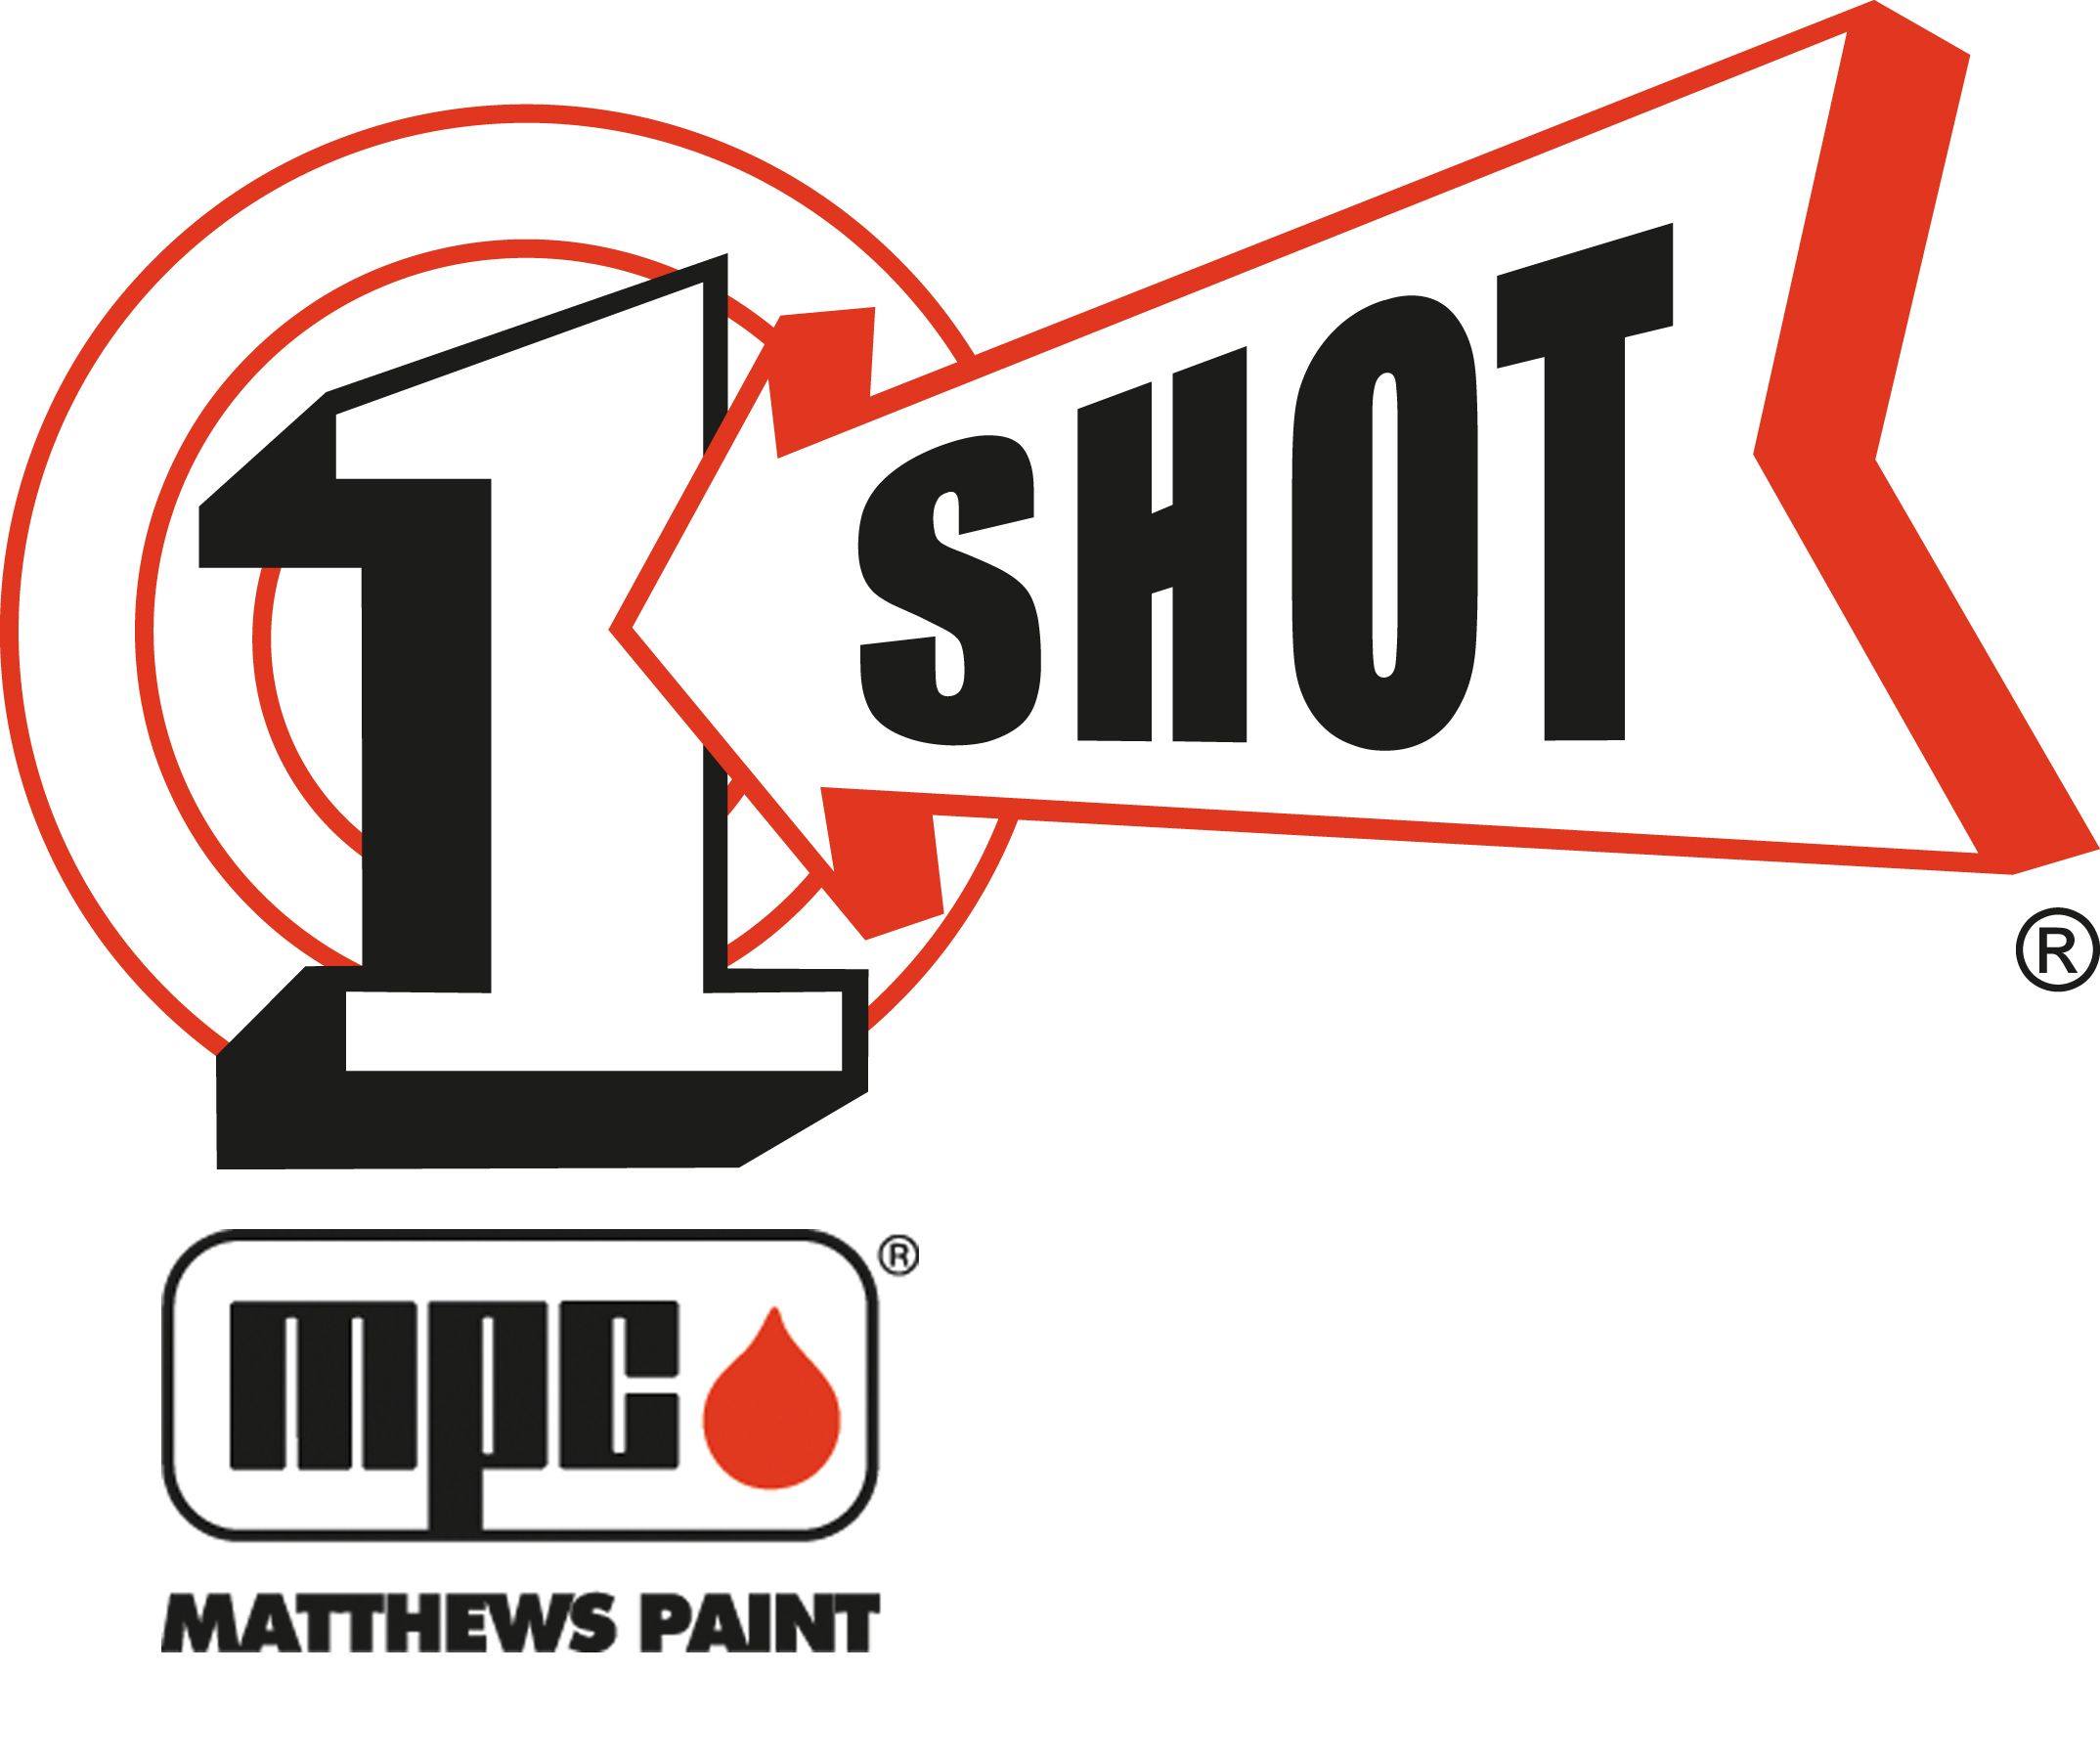 1 Shot and Matthews Paint logos